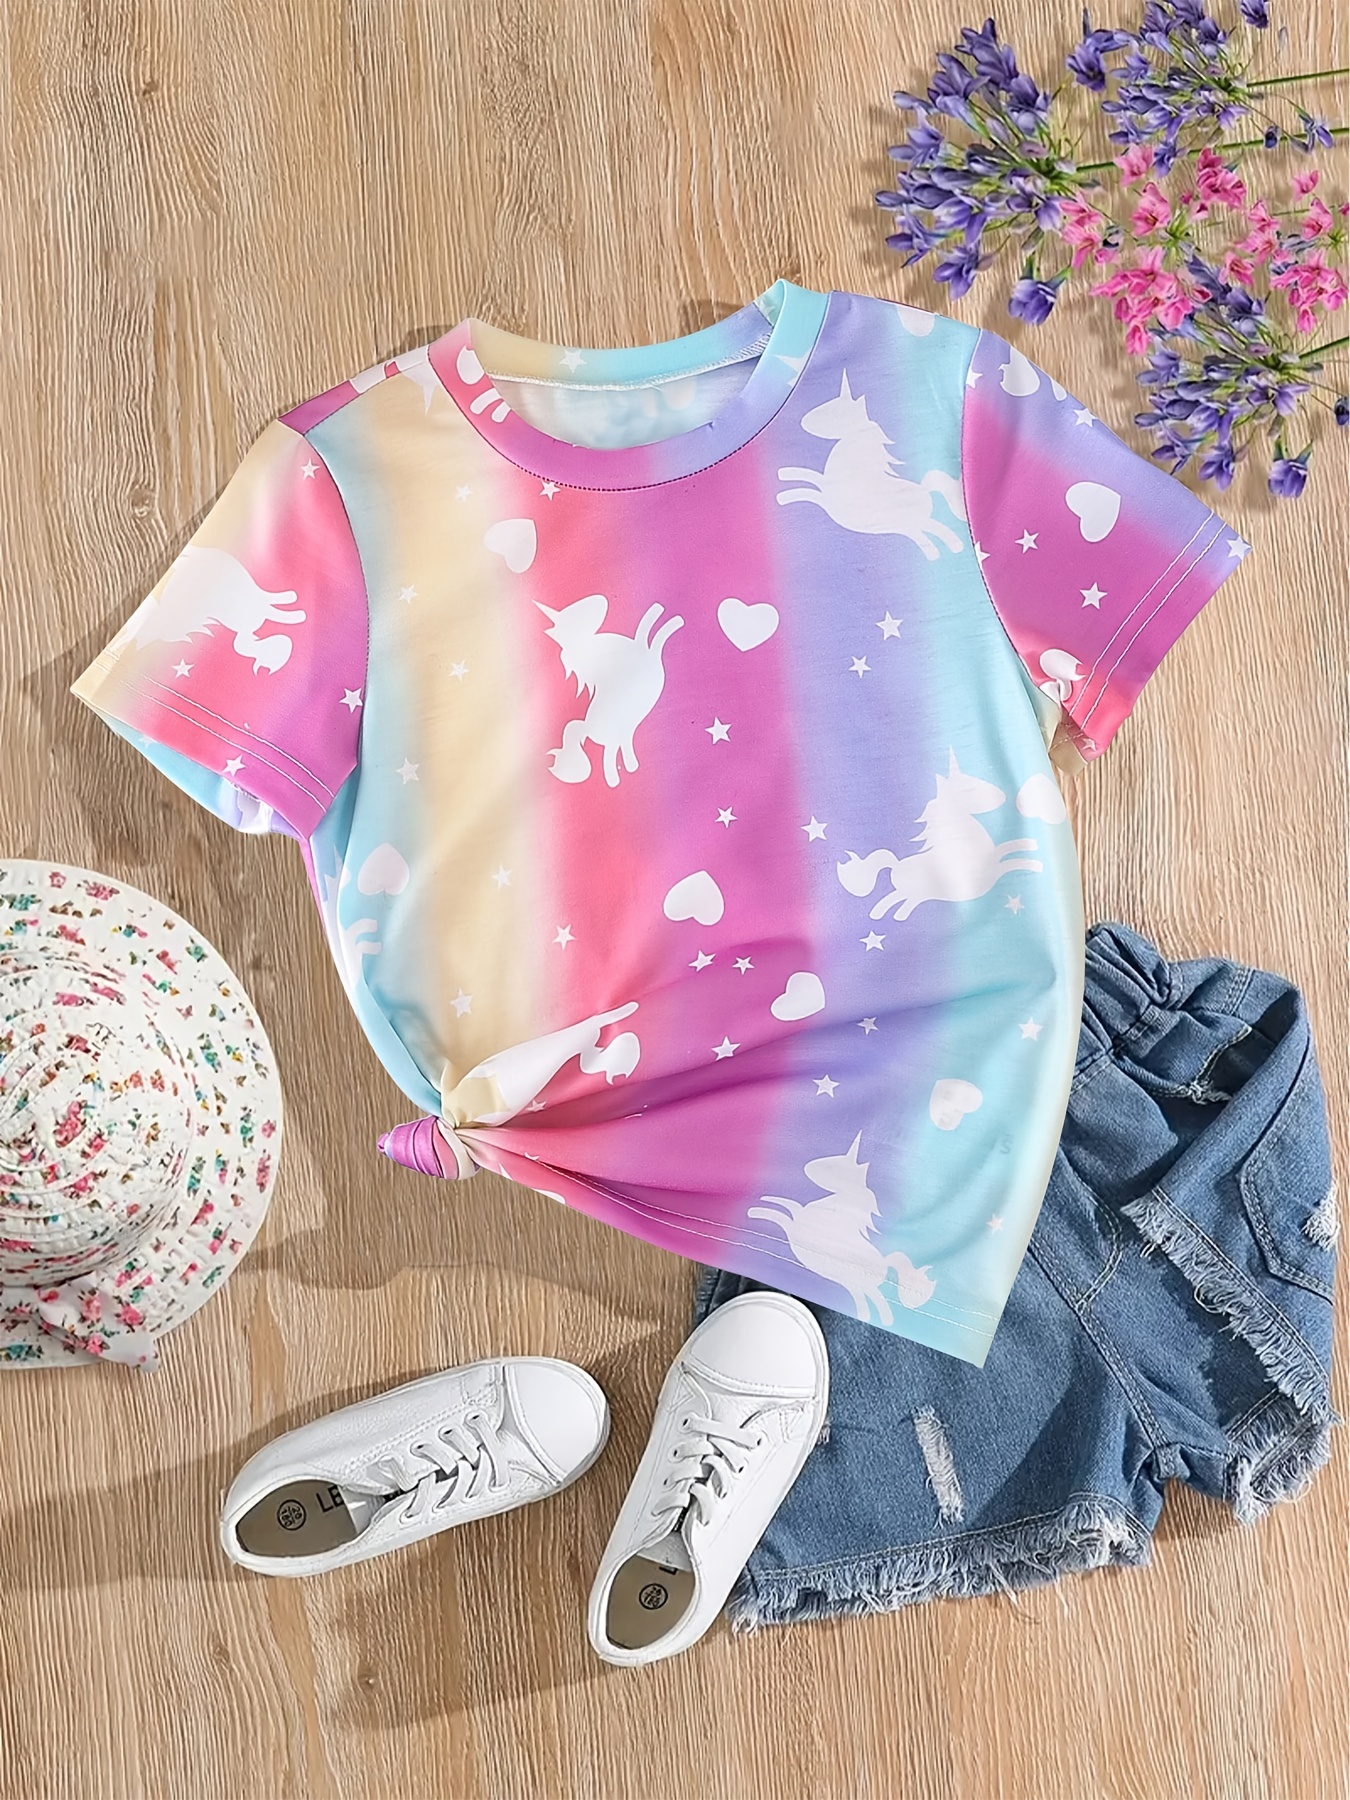 Girls Cartoon Unicorn Graphic T Shirt for Summer Clothes